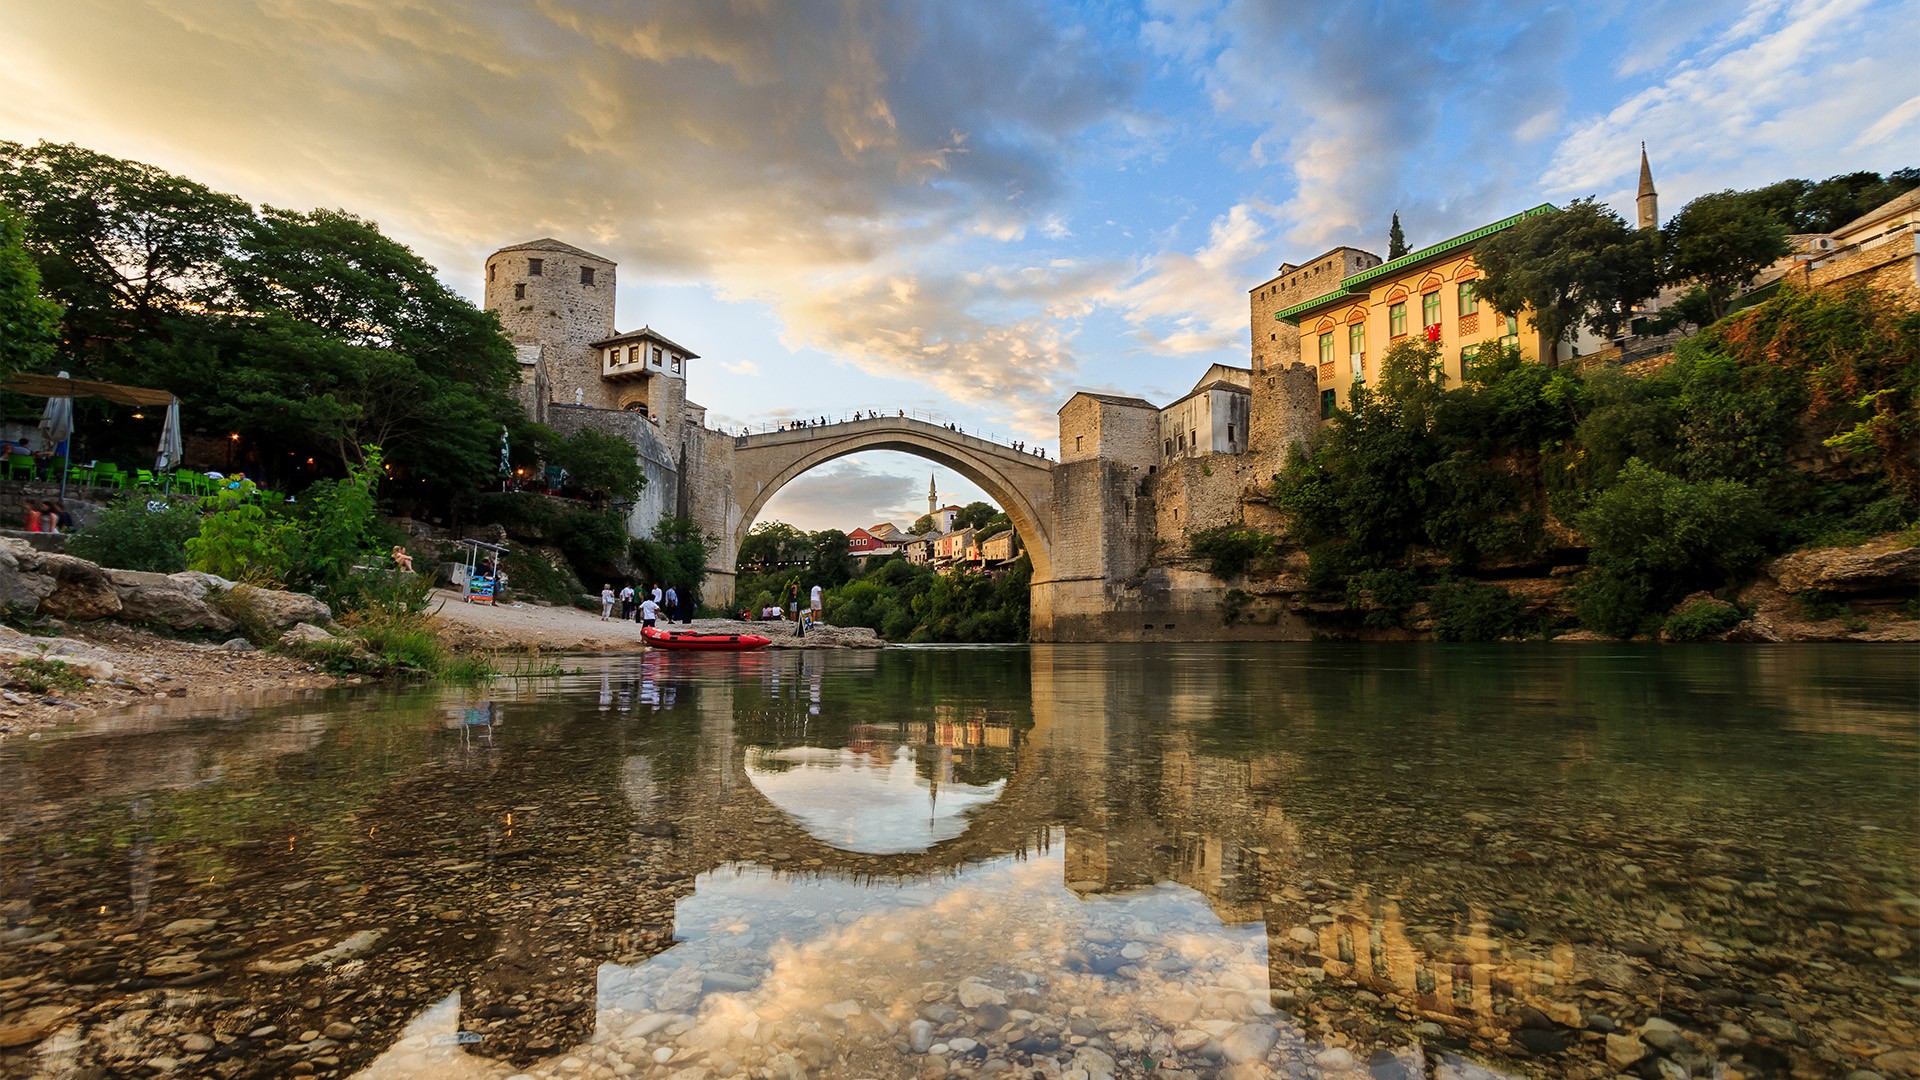 Mostar Bridge, Bosnia and Herzegovina